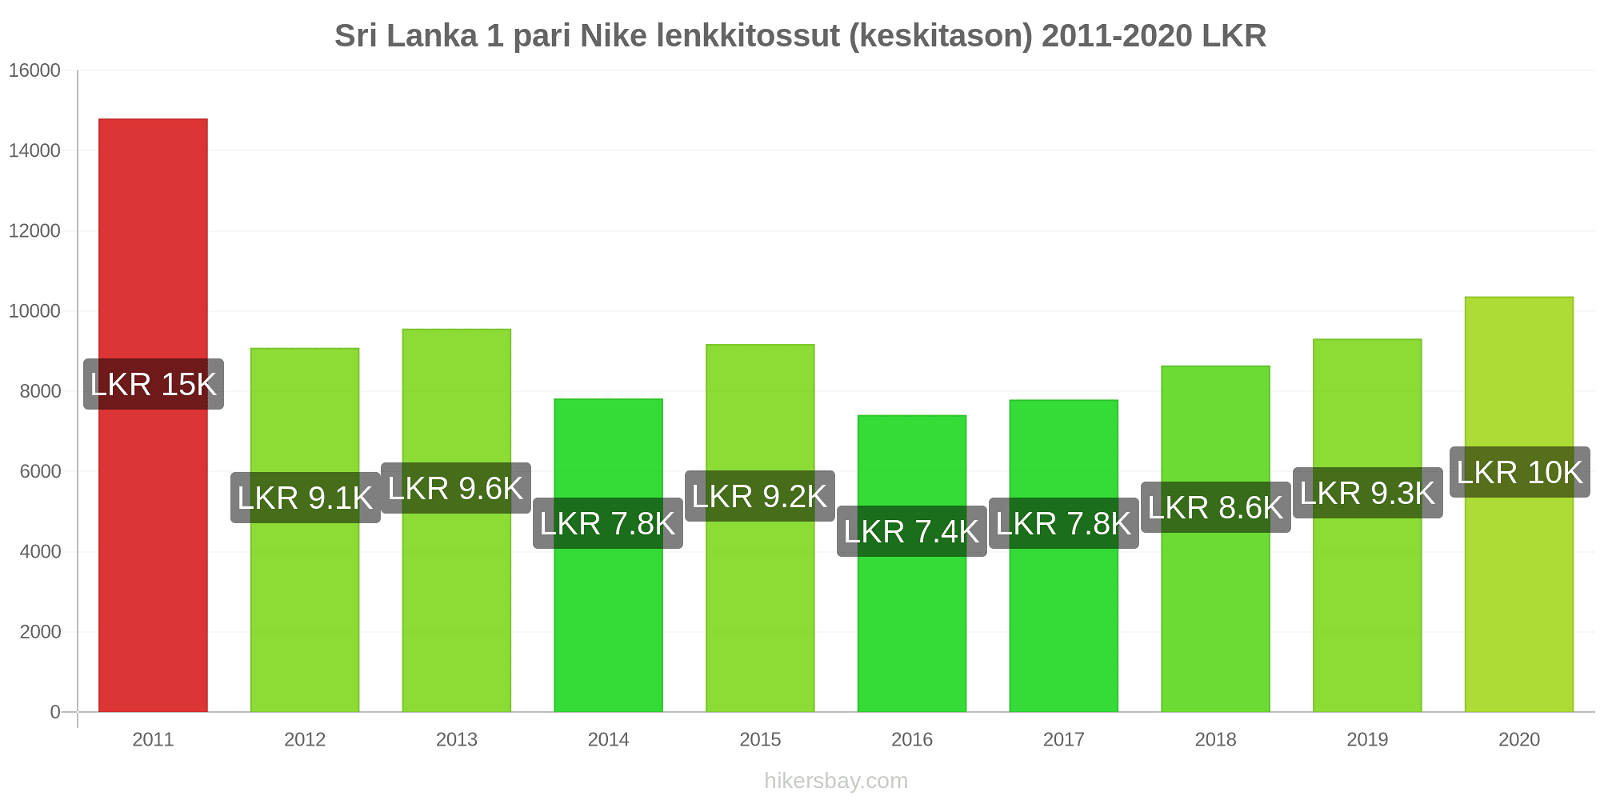 Sri Lanka hintojen muutokset 1 pari Nike lenkkitossut (keskitason) hikersbay.com